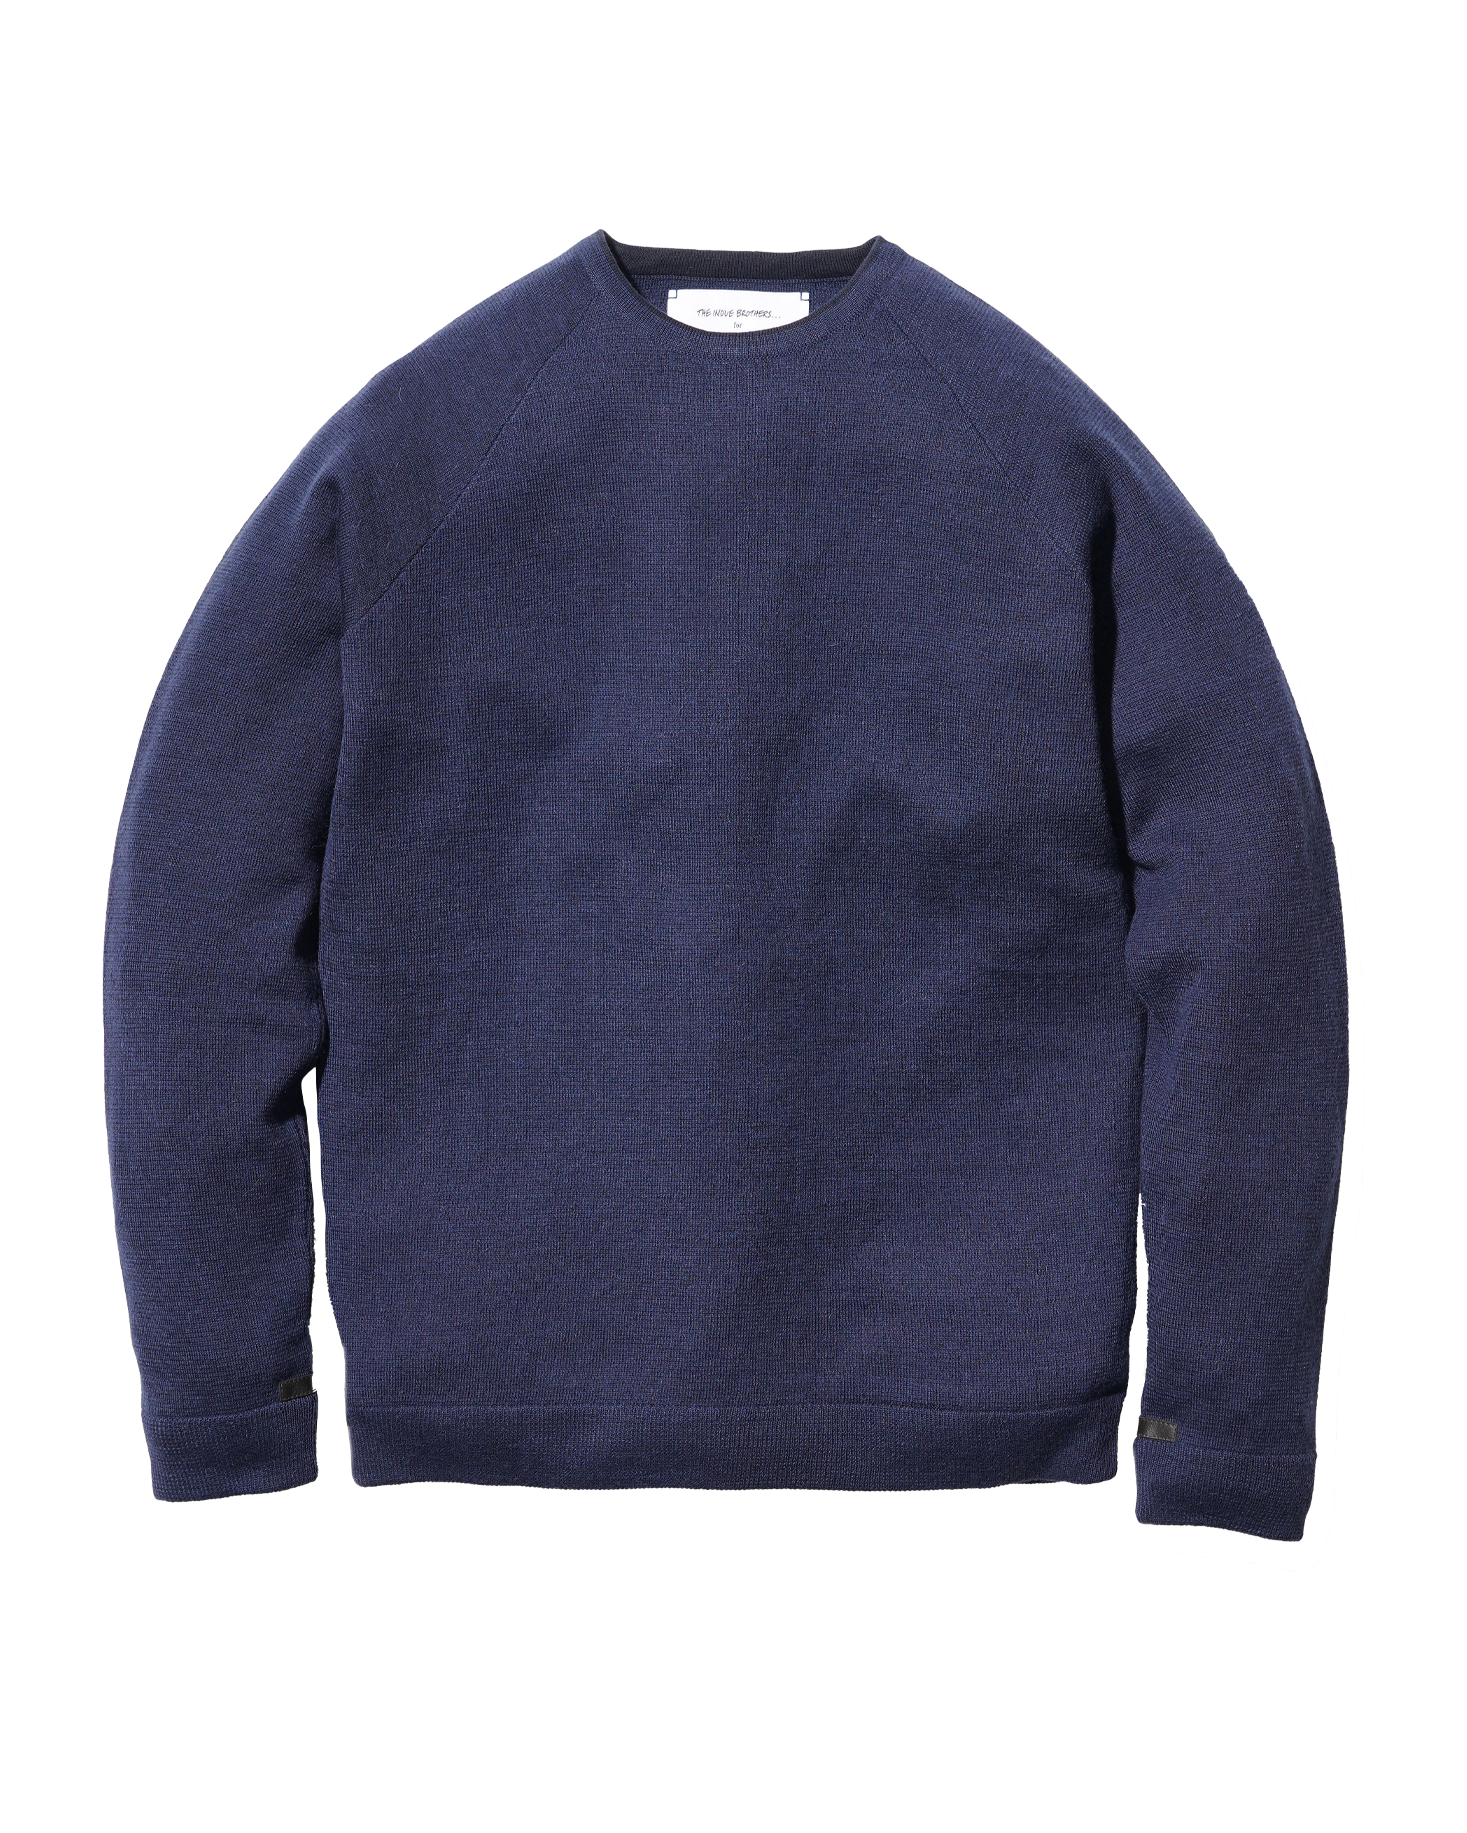 Raglan Crewneck Knit Sweater